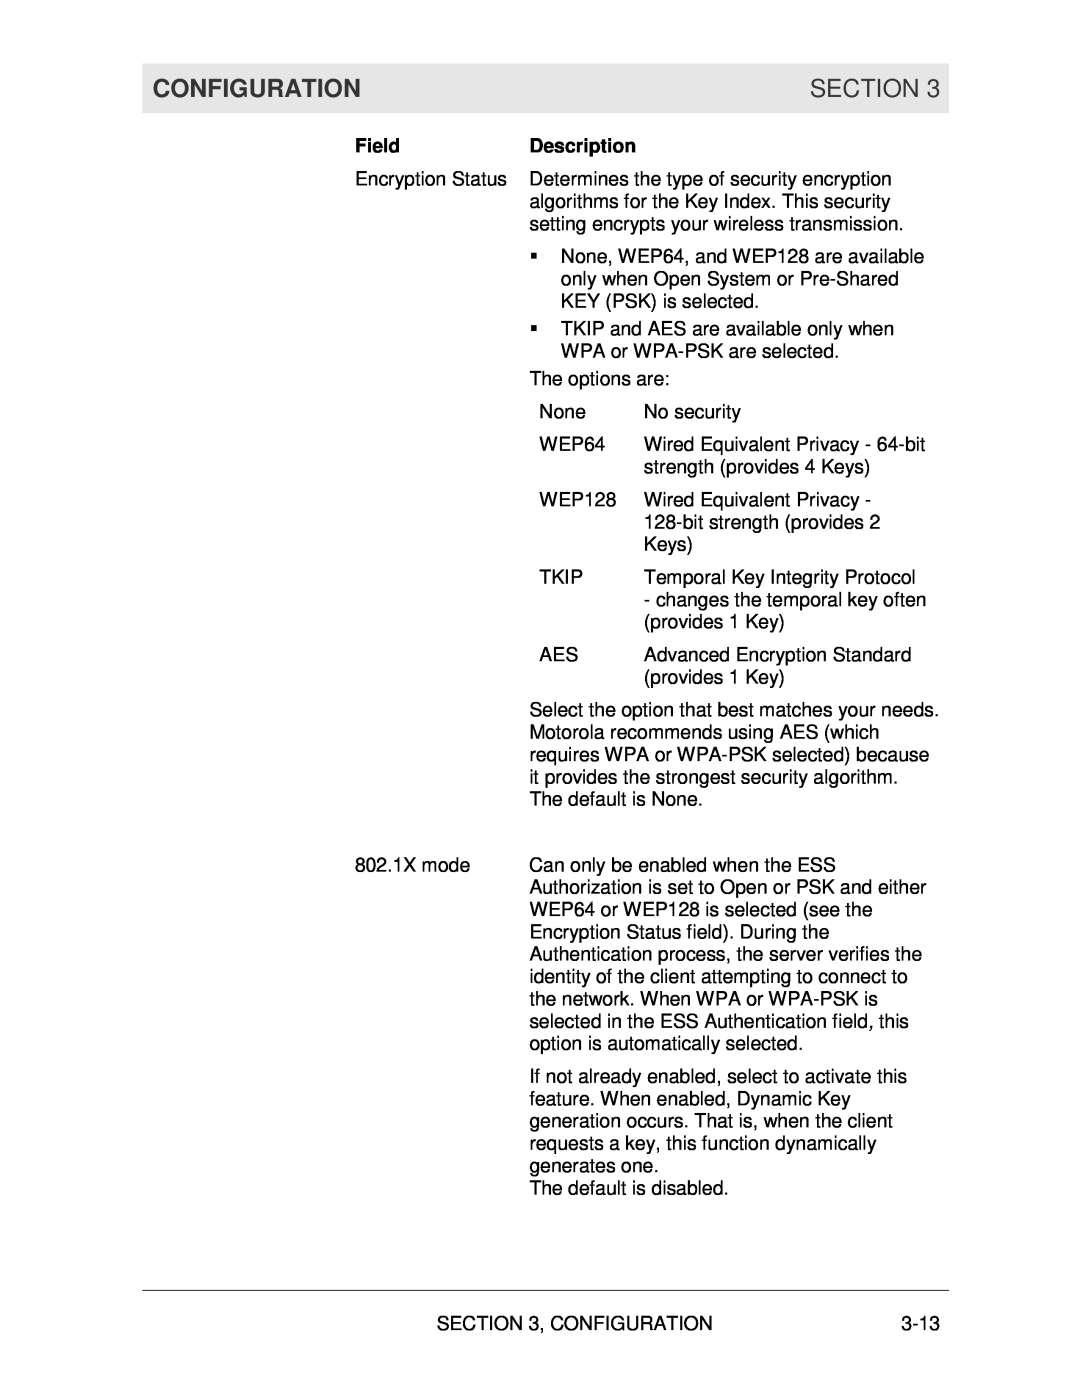 Motorola WR850G manual Configuration, Section, Field, Description 